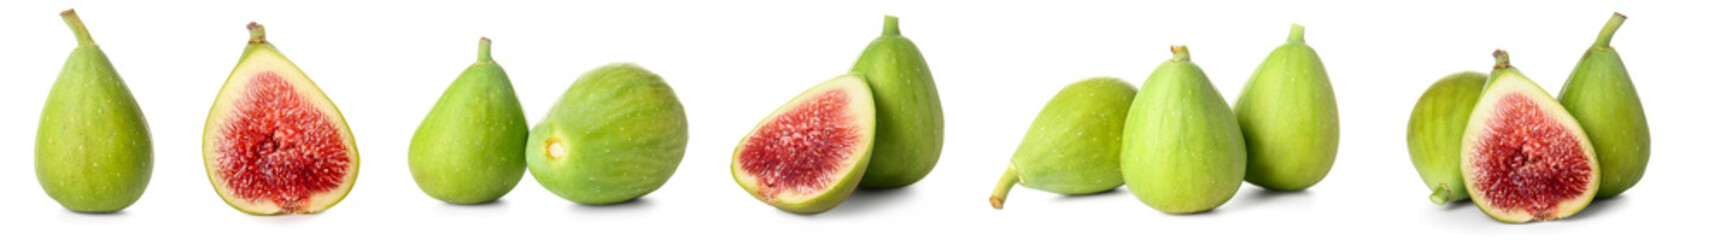 Sticker - Set of fresh green figs on white background